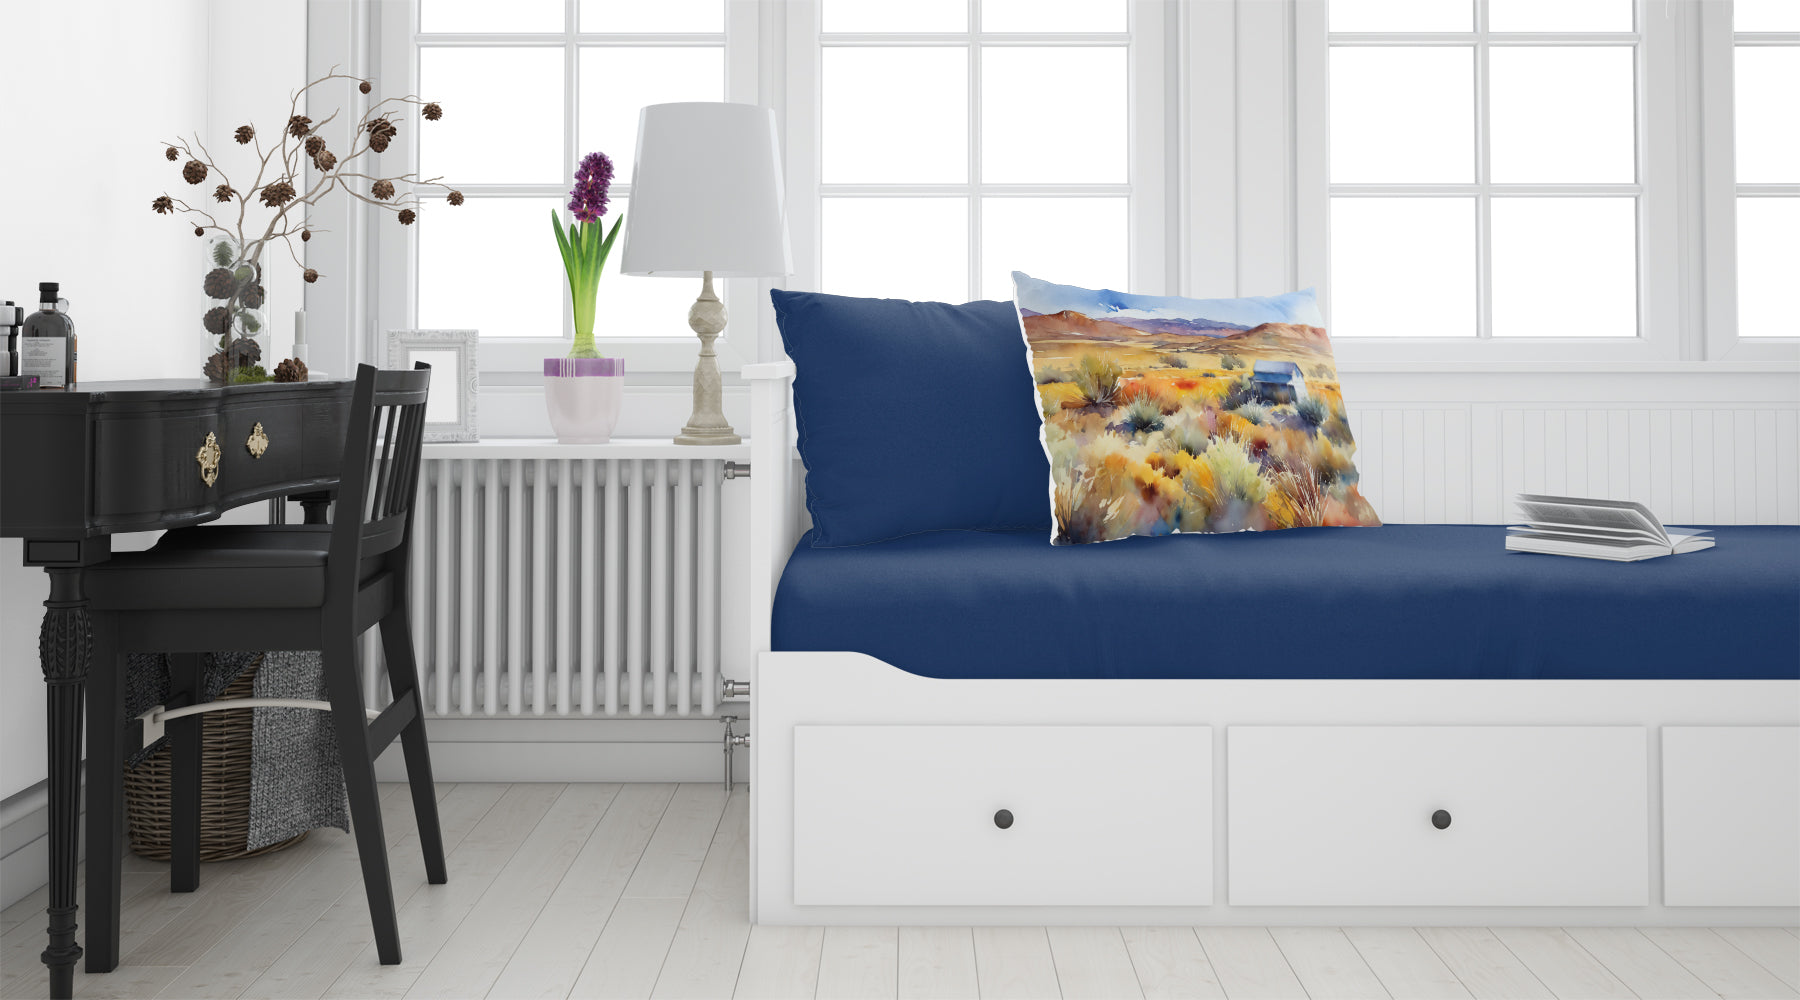 Buy this Nevada Sagebrush in Watercolor Fabric Standard Pillowcase